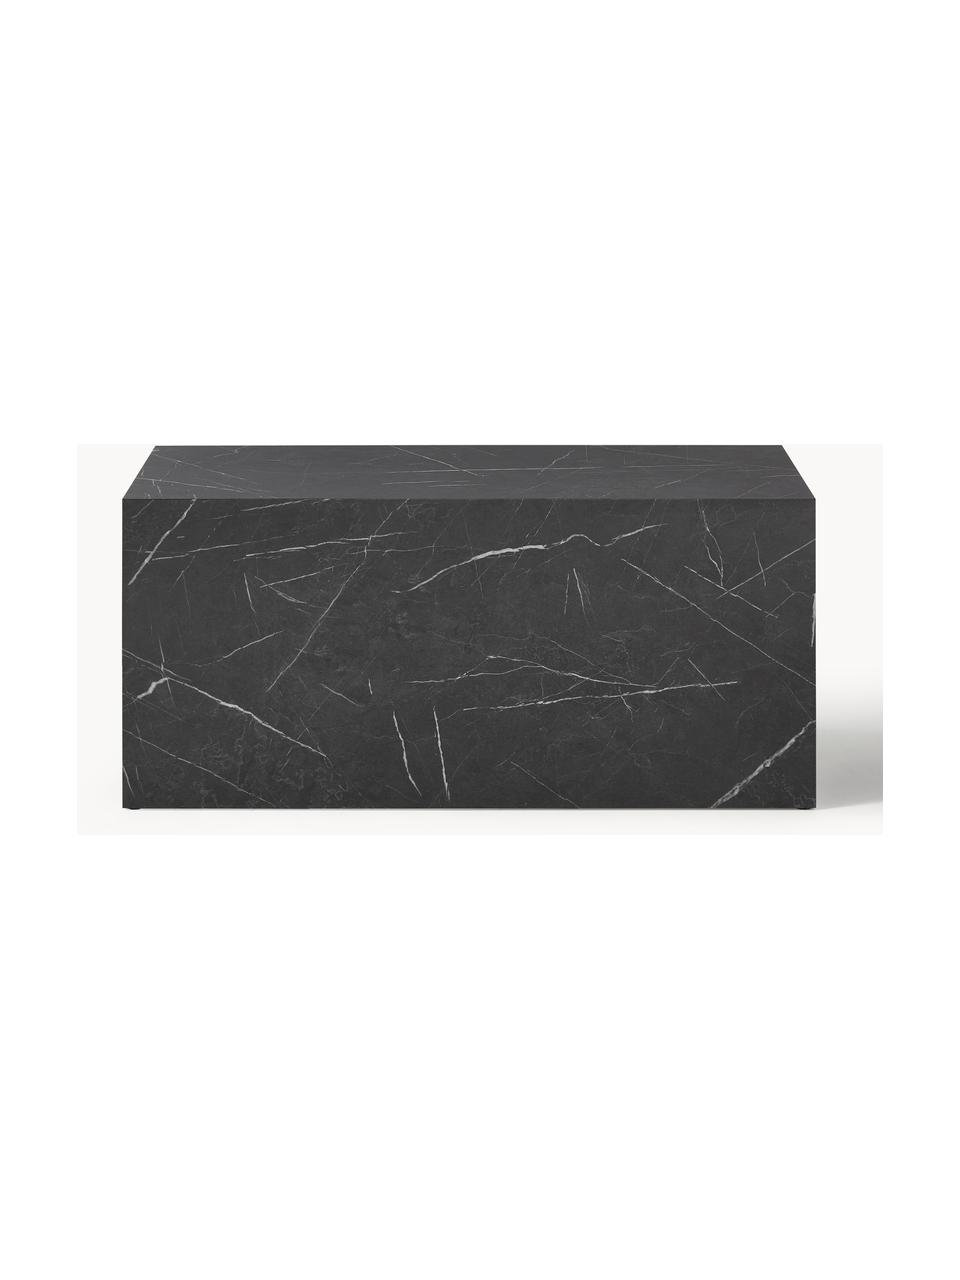 Salontafel Lesley in marmerlook, MDF bekleed met melaminefolie, Marmerlook zwart, glanzend, B 90 x D 50 cm